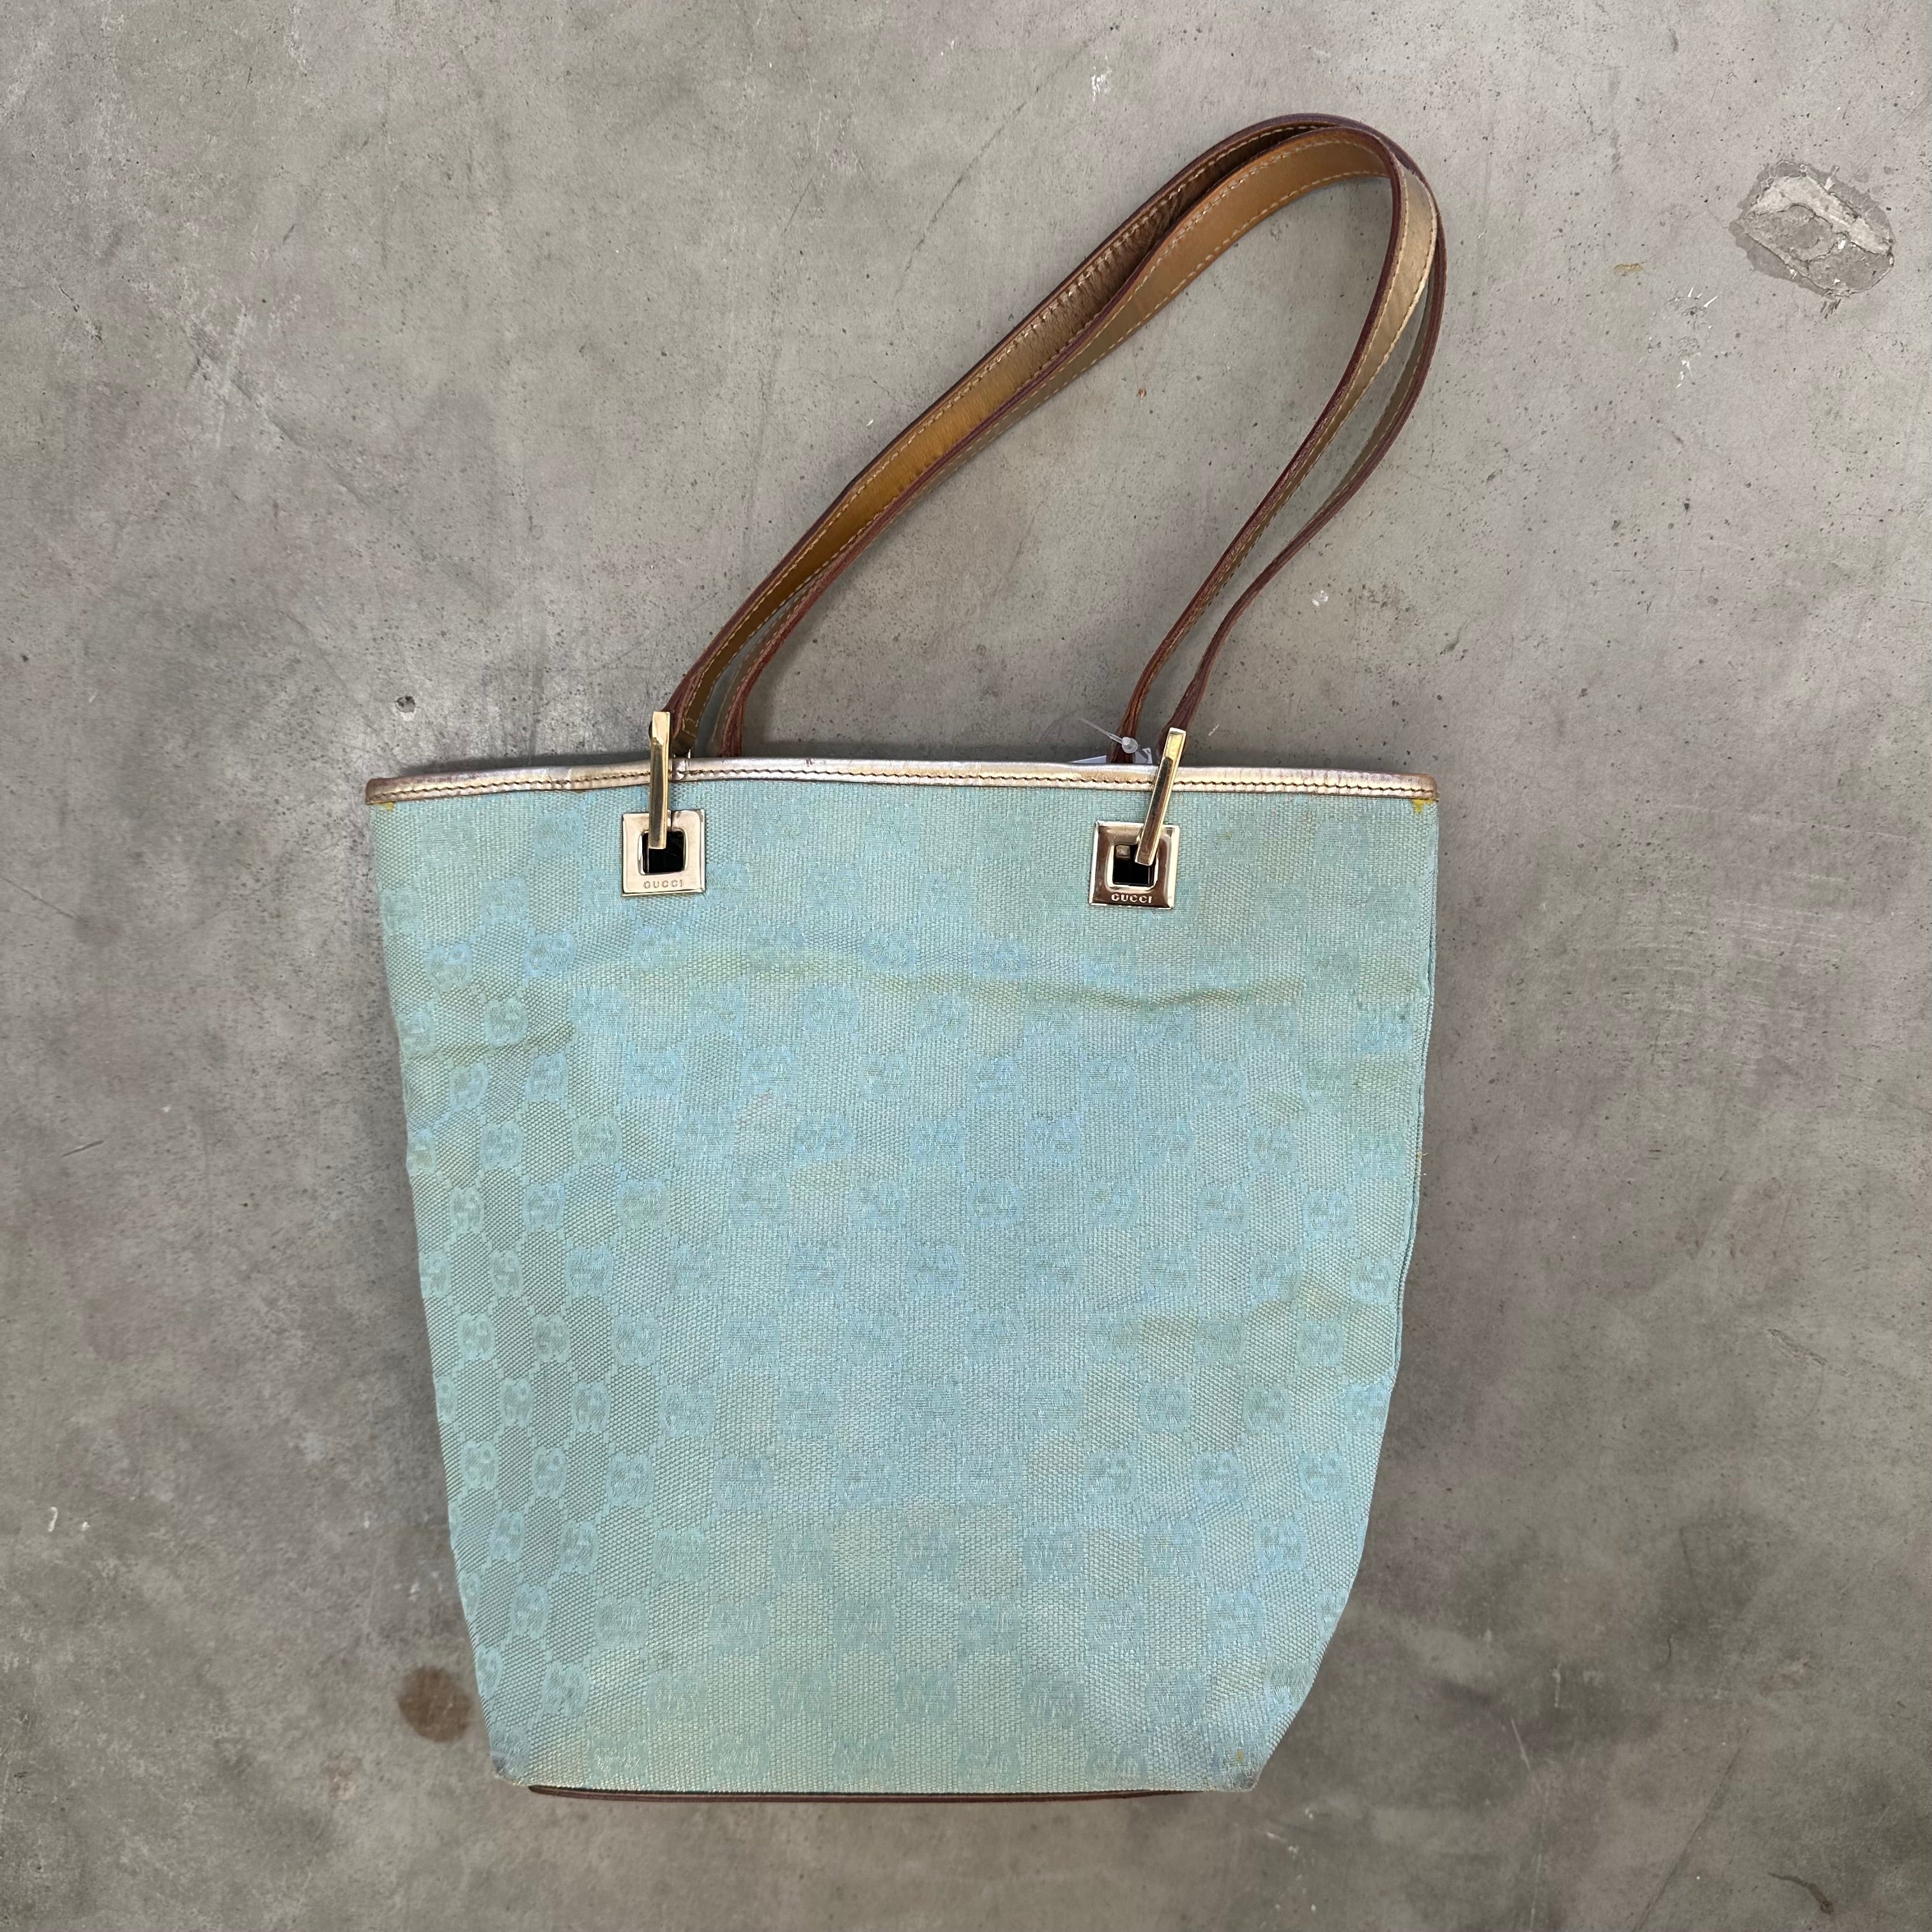 Gucci Sea Blue Classic GG Metallic Tote Bag